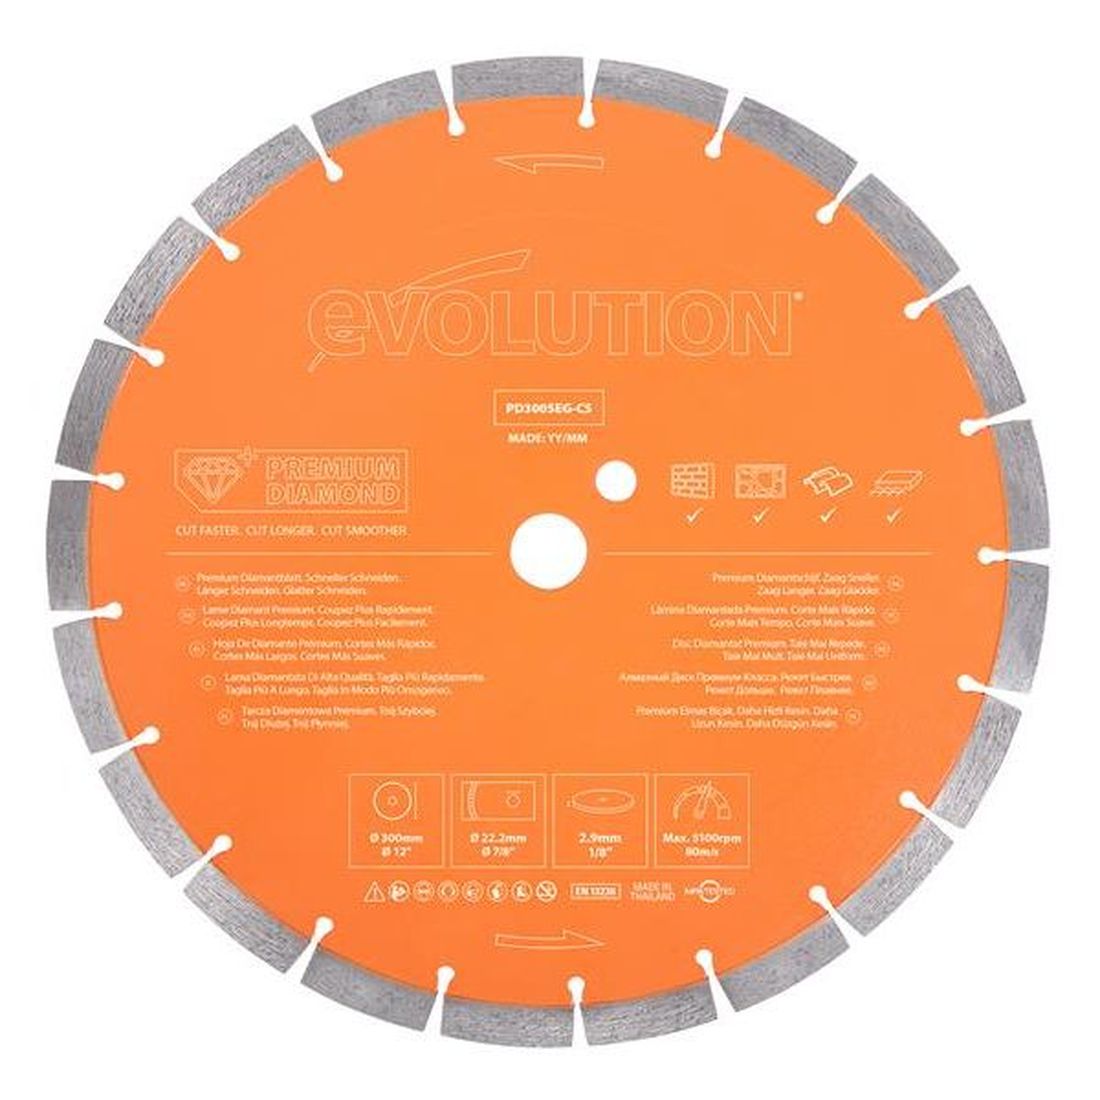 Evolution Premium Diamond Disc Cutter Blade 300 x 22.2mm                                  